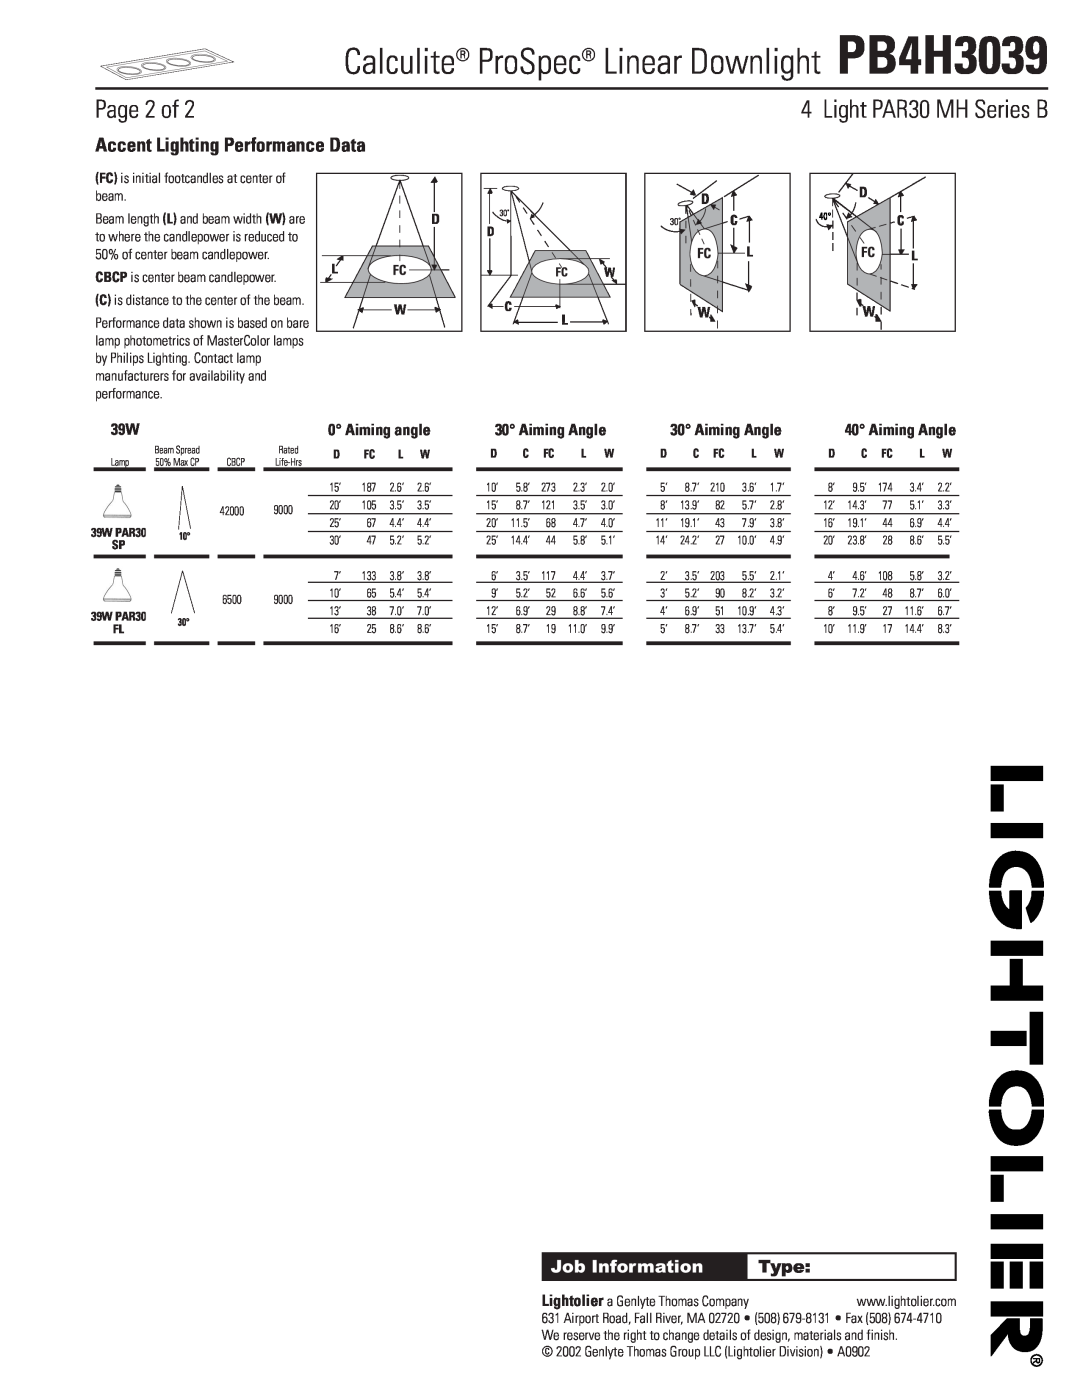 Lightolier Page 2 of, Accent Lighting Performance Data, Calculite ProSpec Linear Downlight PB4H3039, Job Information 